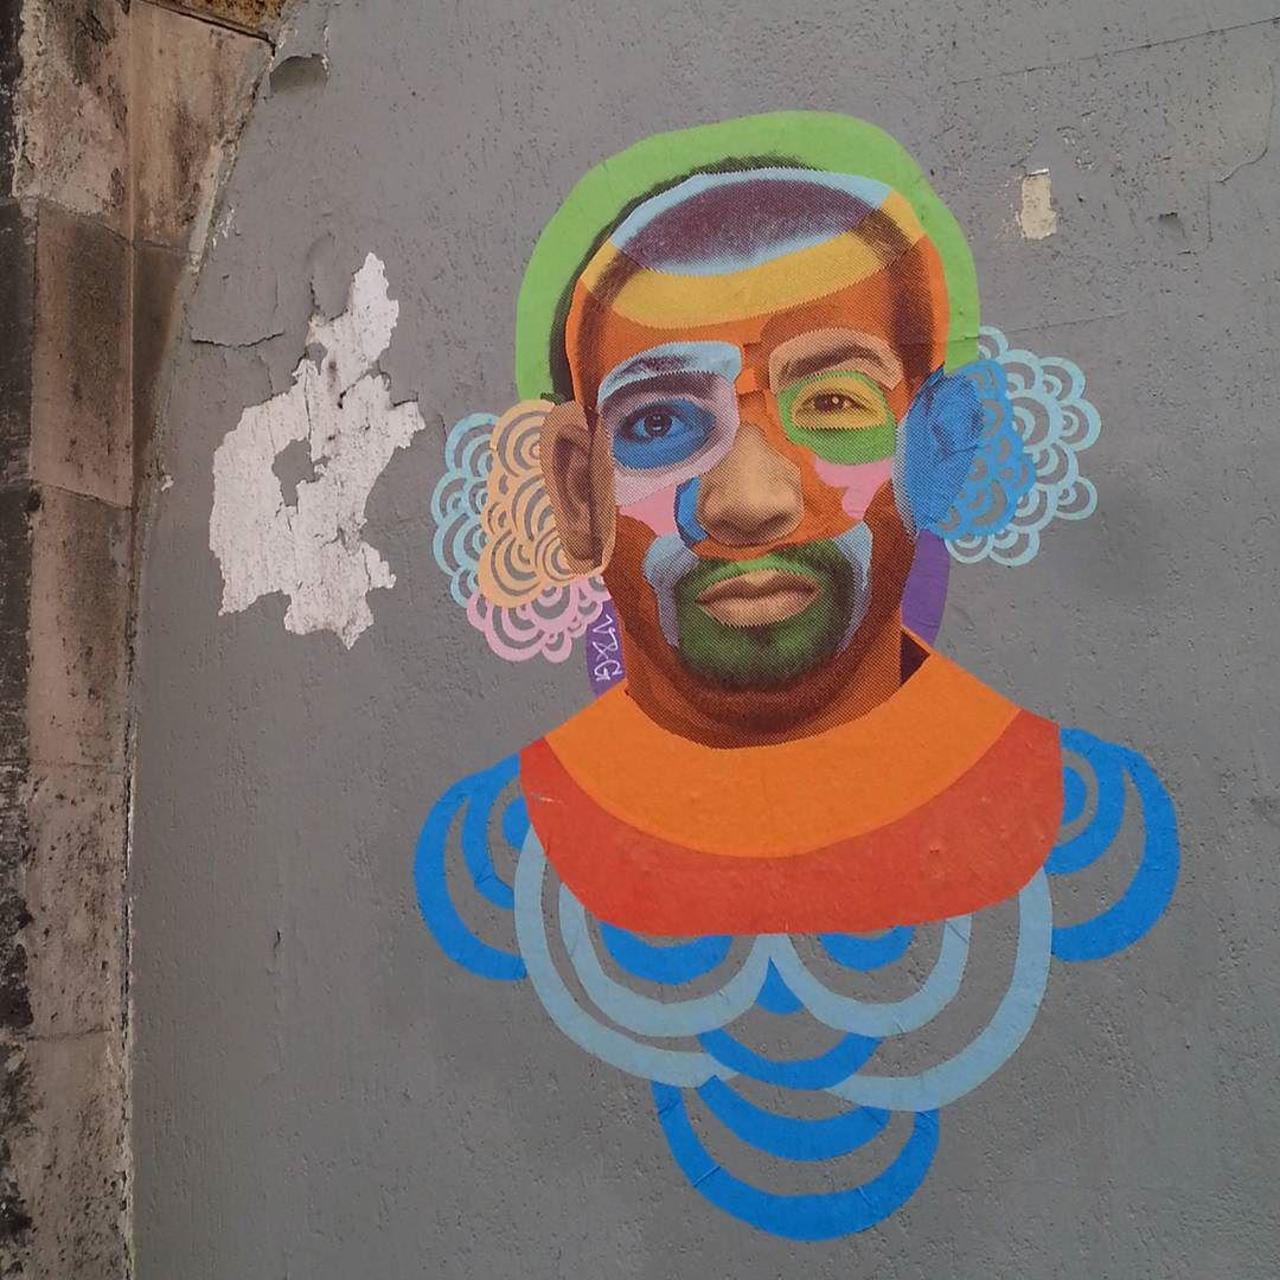 circumjacent_fr: #Paris #graffiti photo by fotoflaneuse http://ift.tt/1K4VP9o #StreetArt http://t.co/a2MDIIqK9n